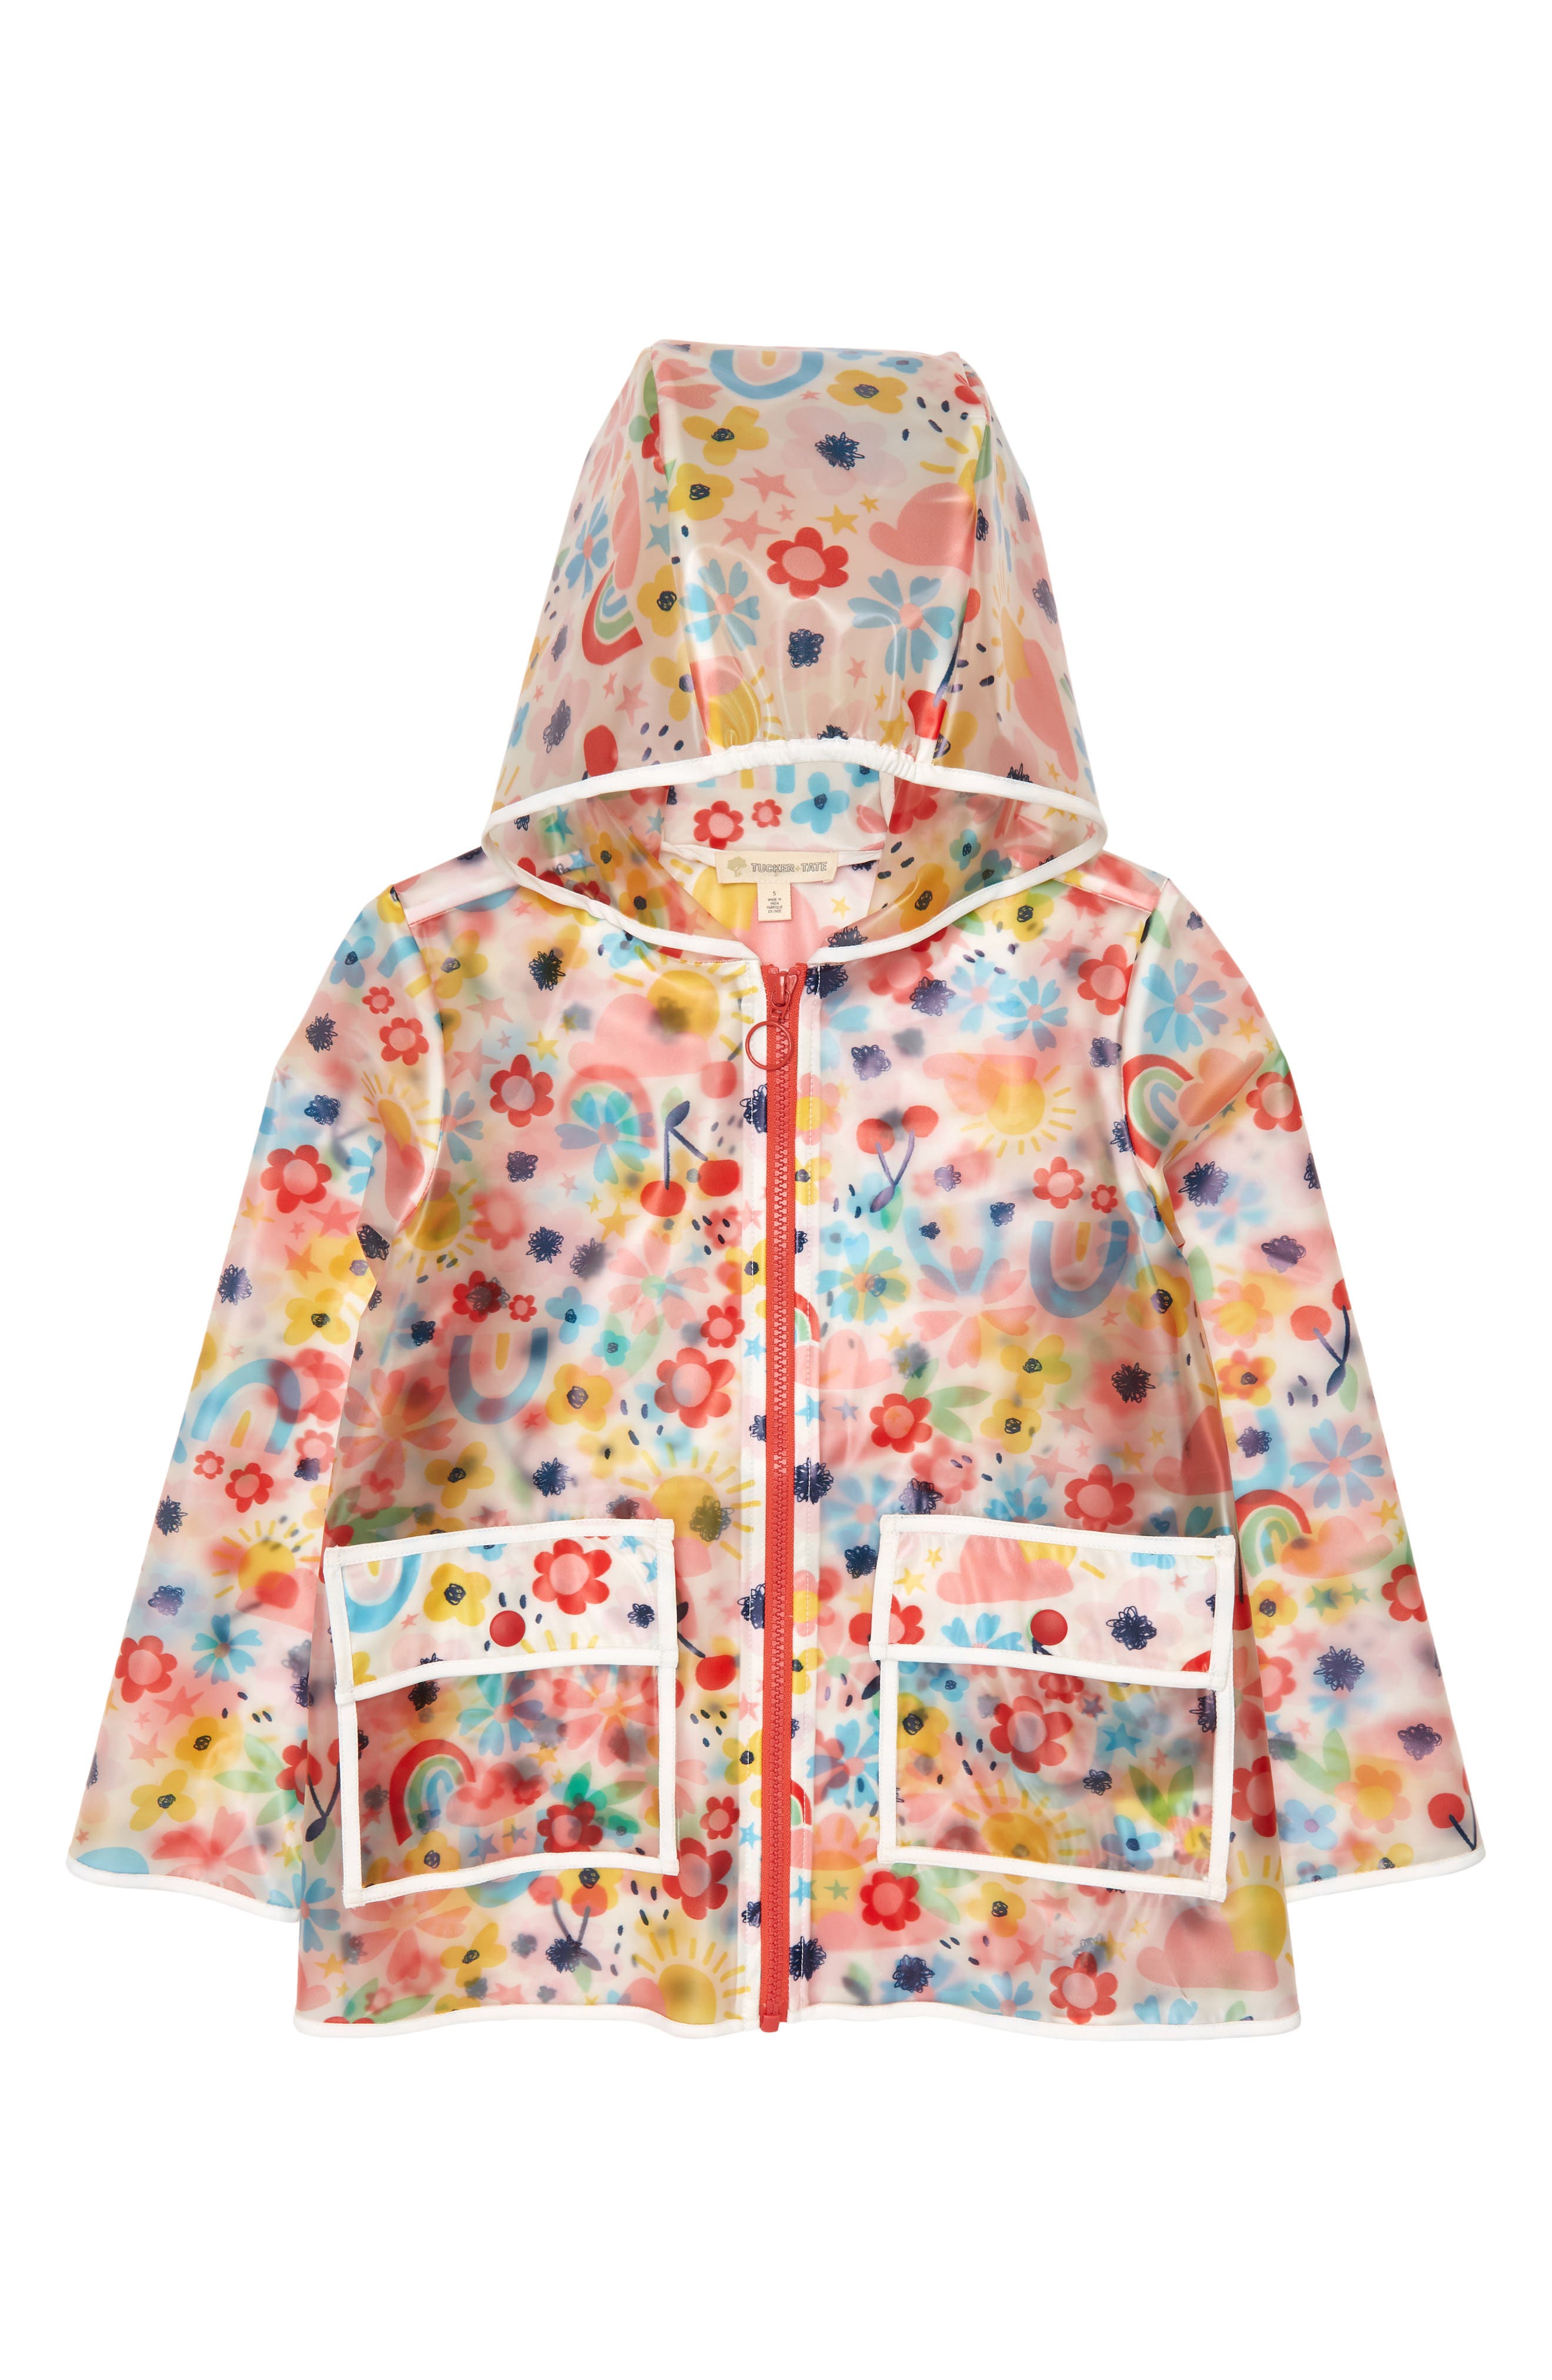 Star Flower Little Girls Rain Jacket Coats with Hood